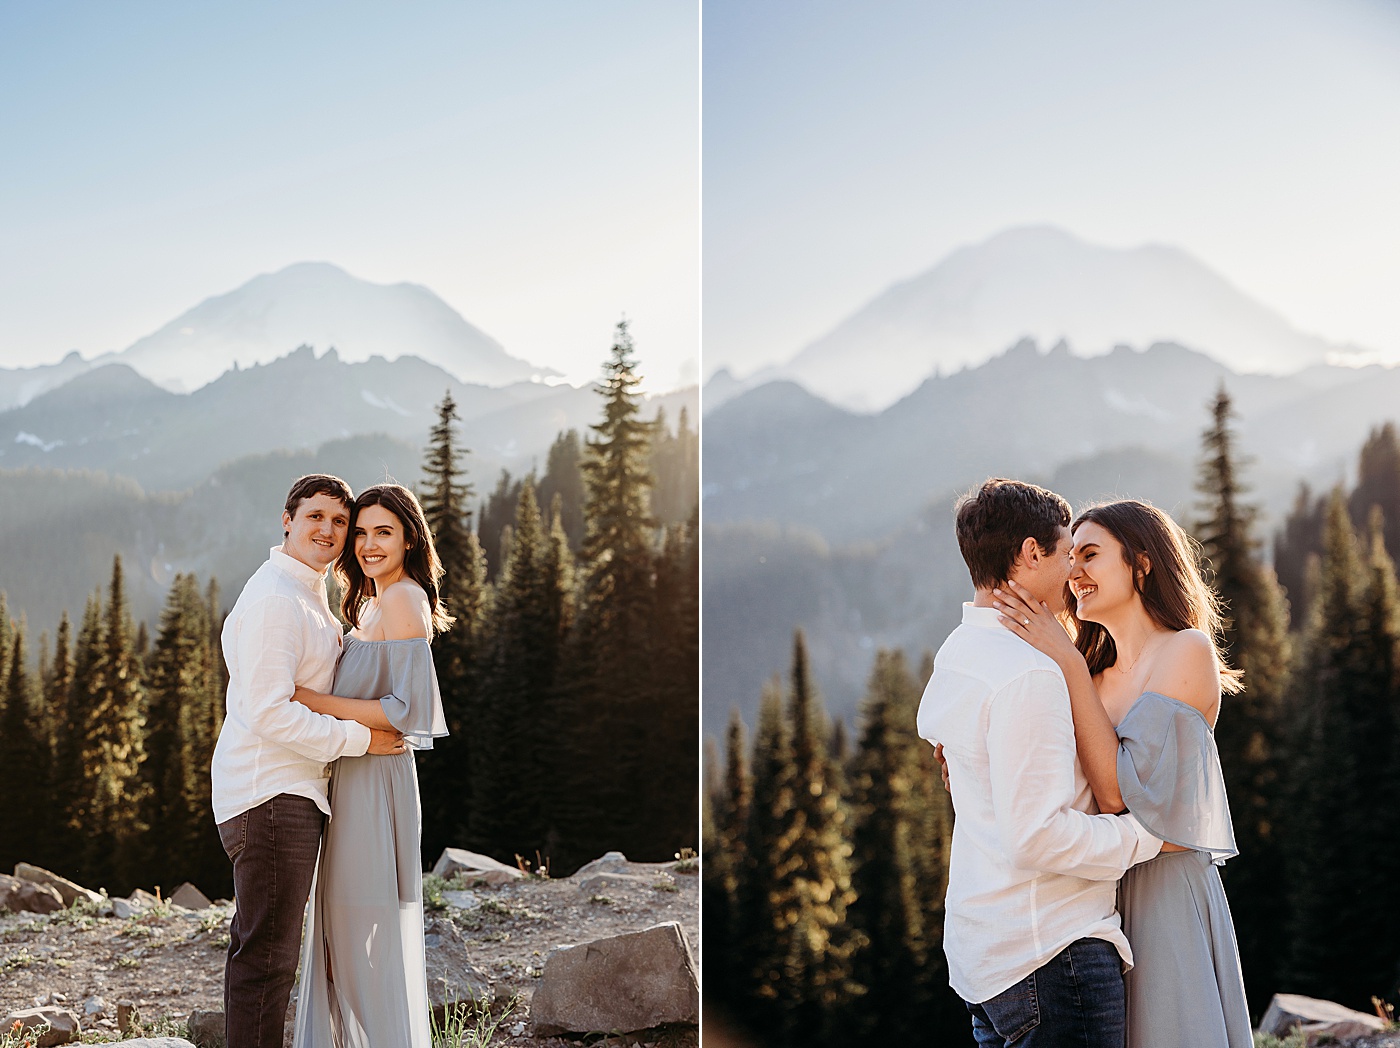 Engagement photos for couple at Mt. Rainier | Photo by Megan Montalvo Photography